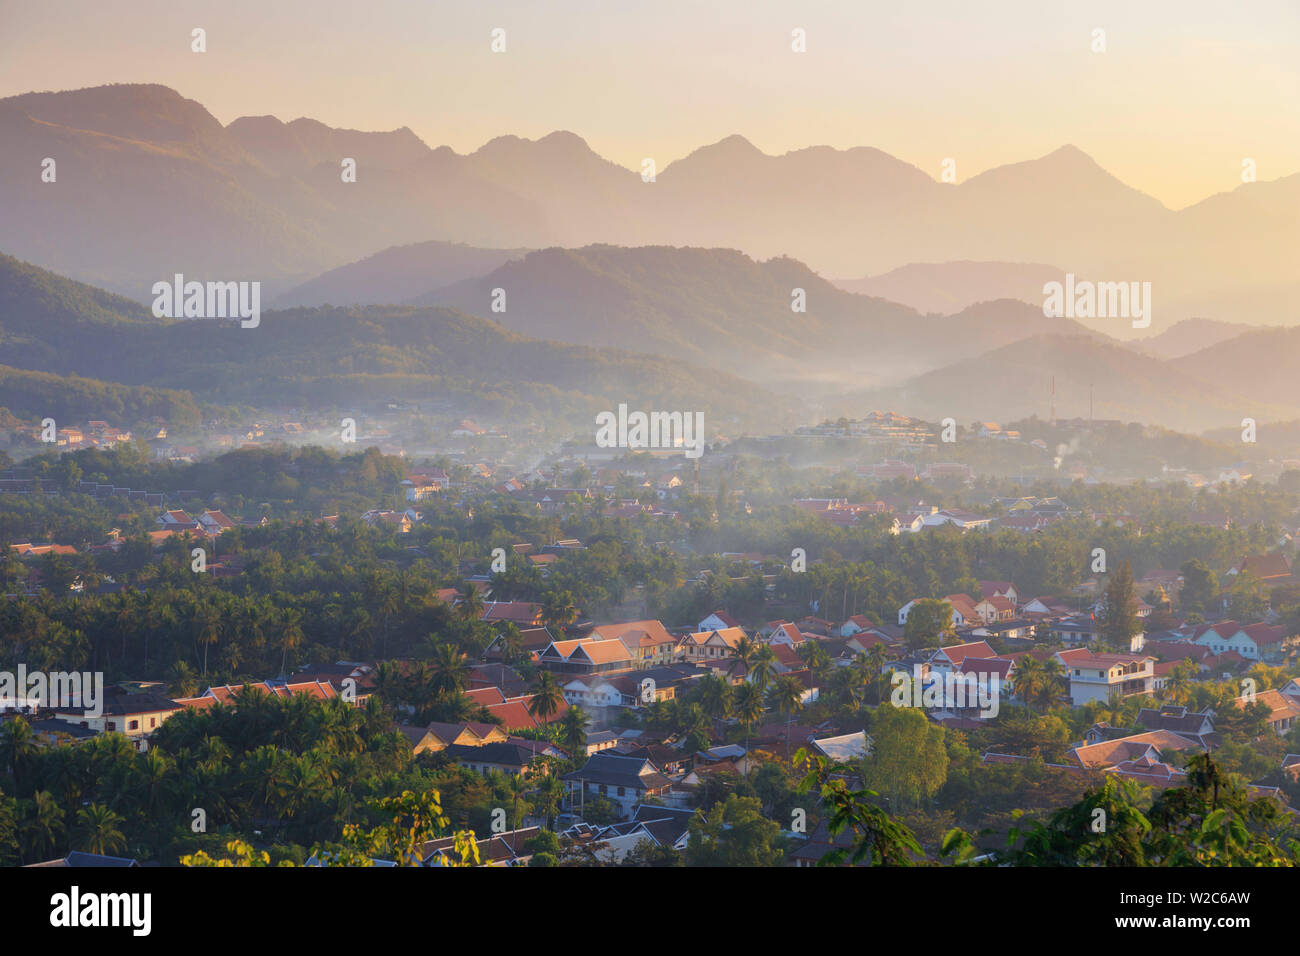 Laos, Luang Prabang (UNESCO Site), view from Mount Phousi Stock Photo